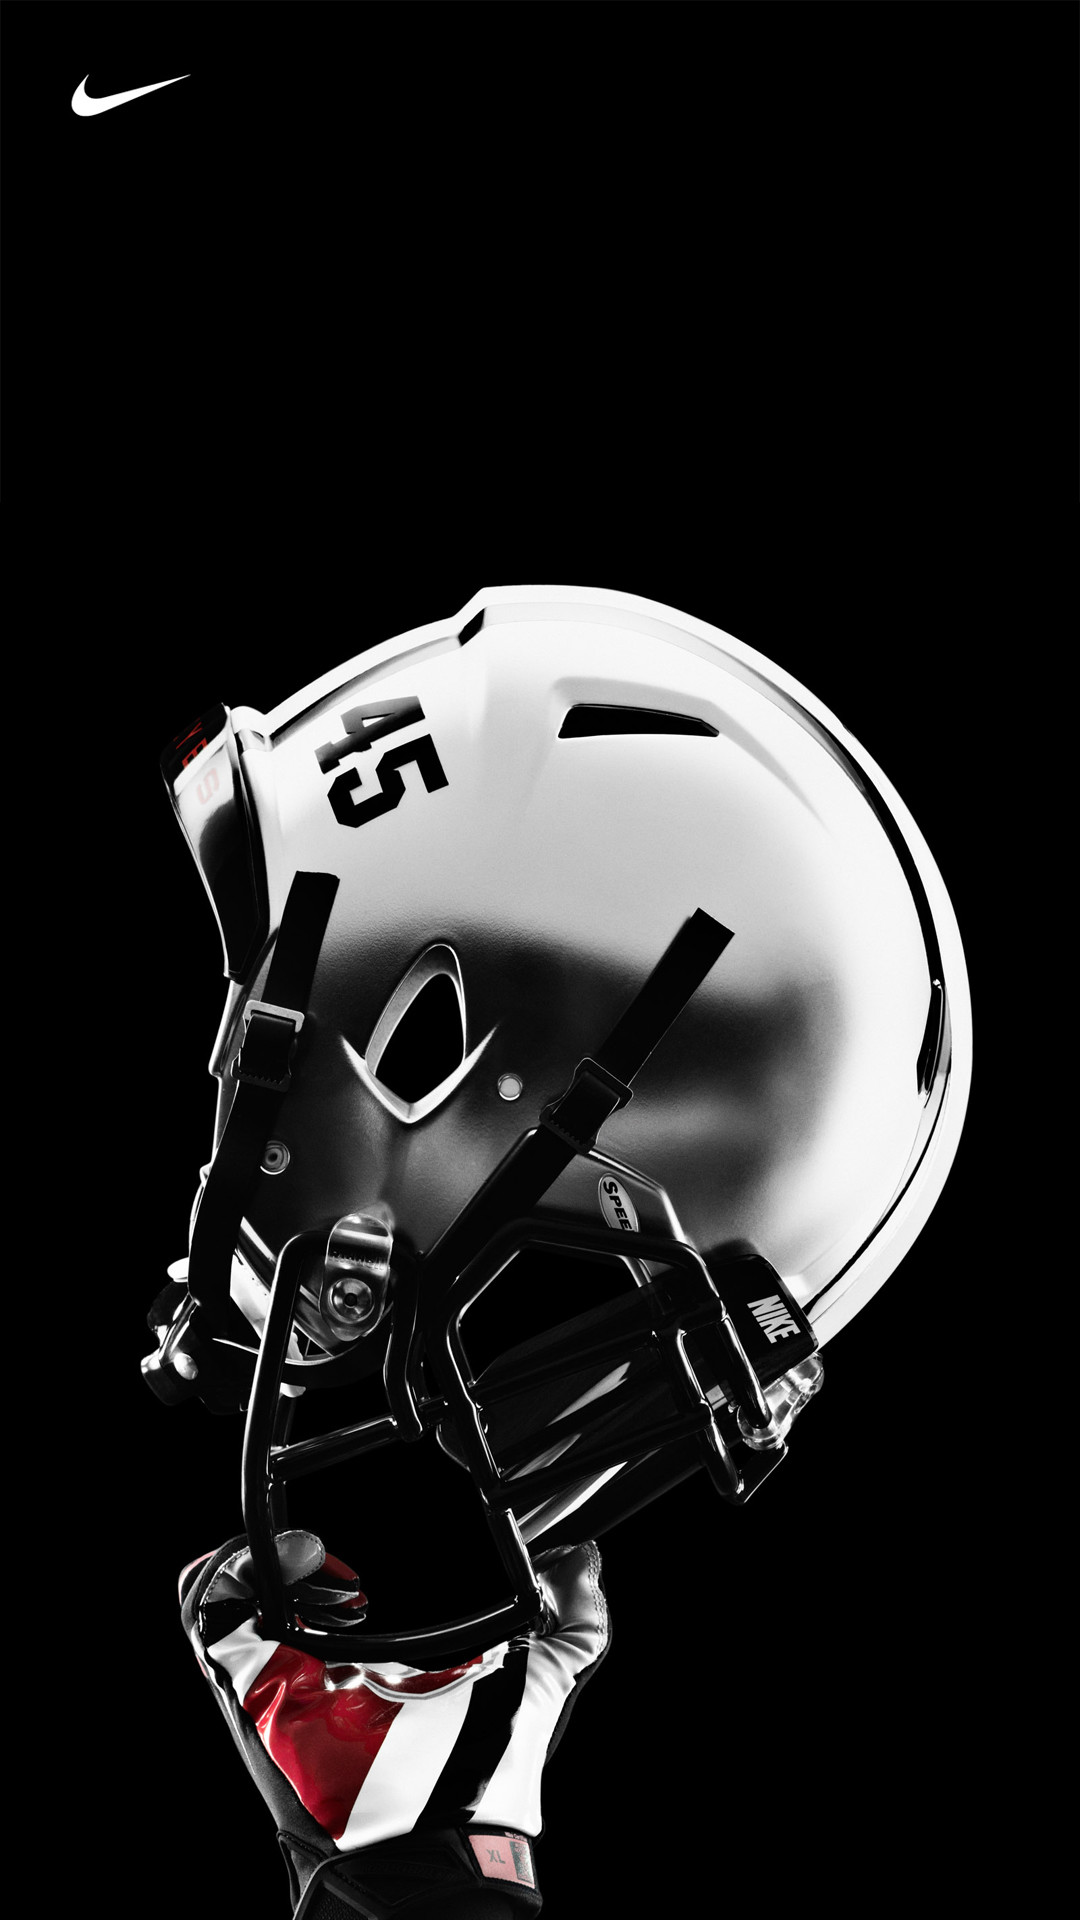 1080x1920 Ohio State Nike Pro Combat Football Uniform Helmet